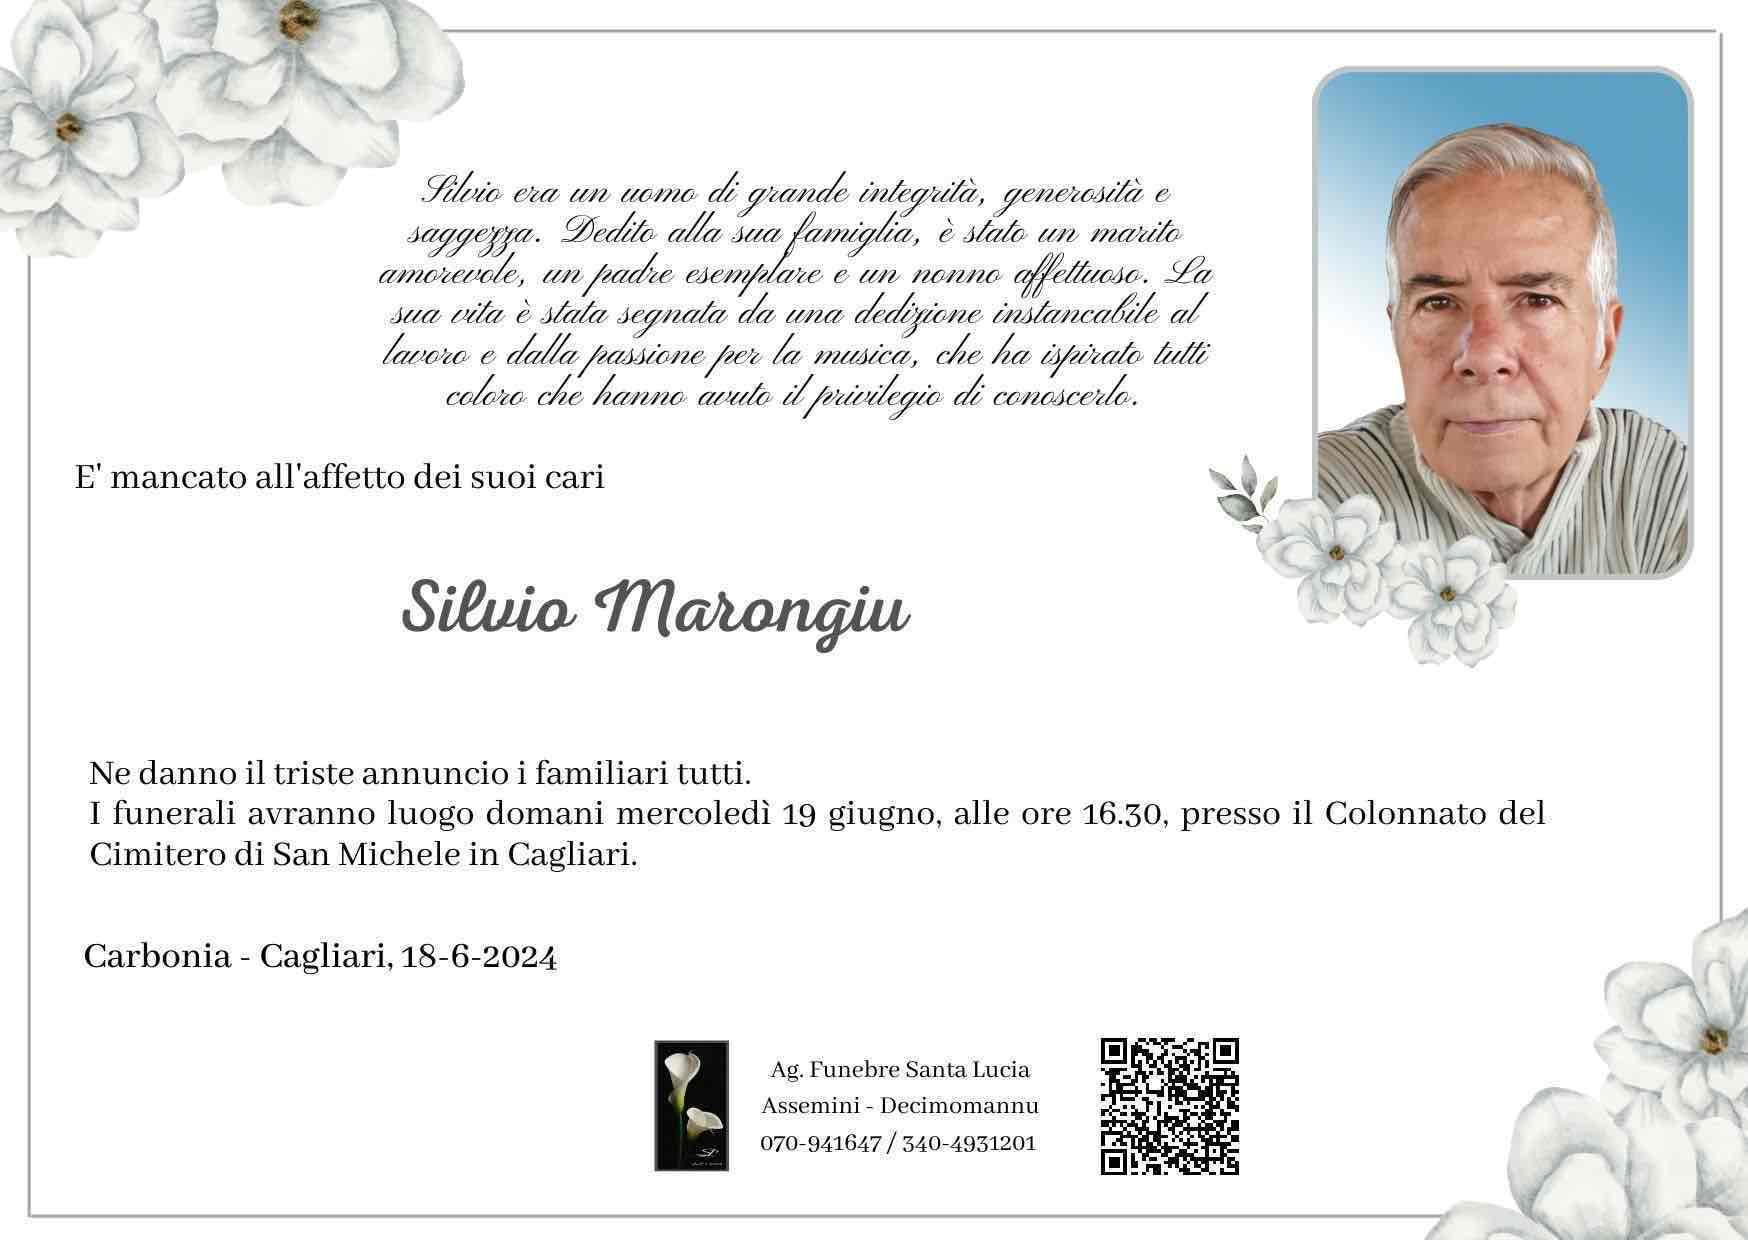 Silvio Marongiu